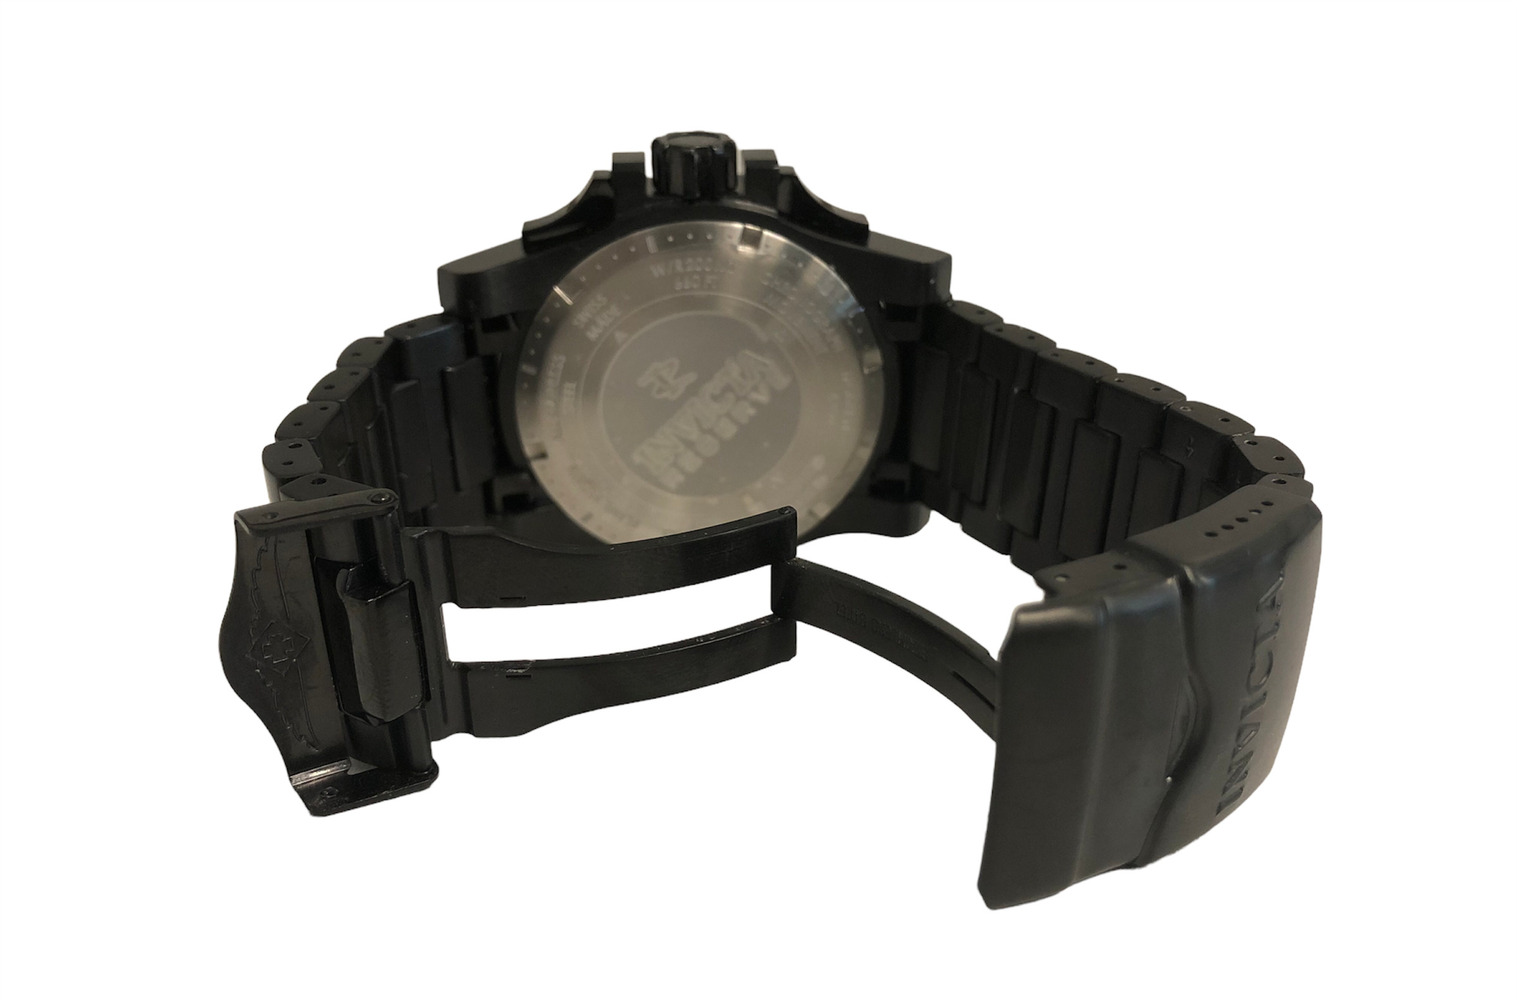  Invicta Reserve Excursion Chronograph 6260 Wristwatch